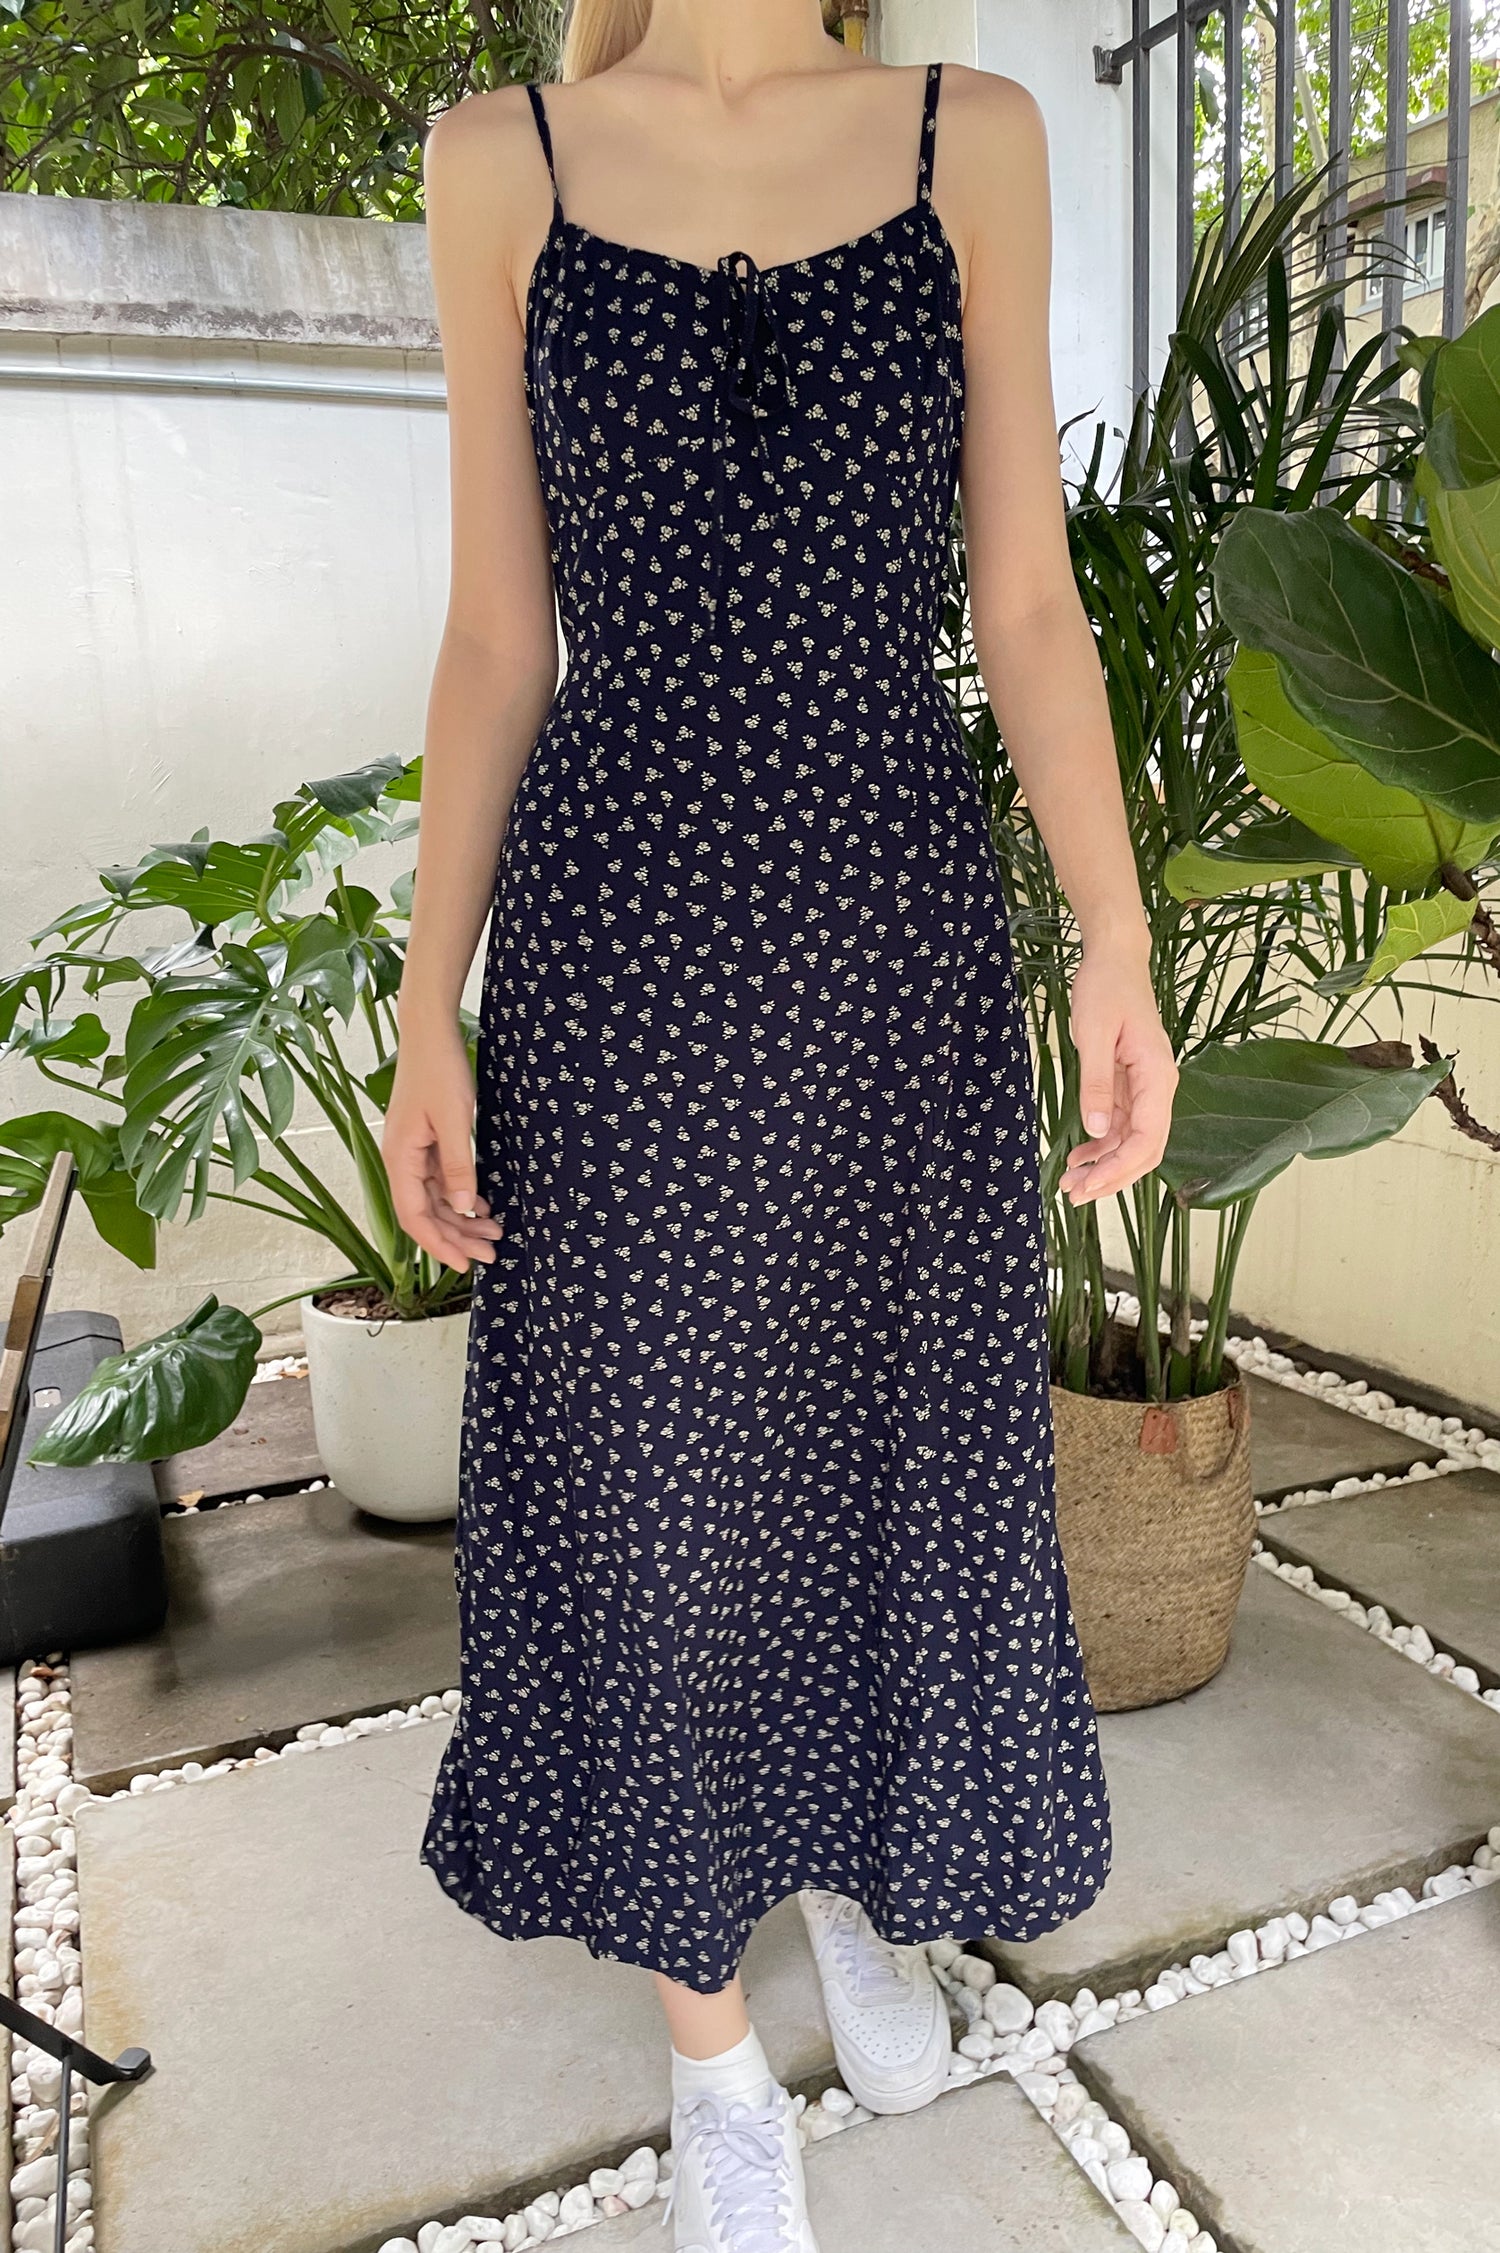 Brandy Melville Colleen dress! , The perfect summer